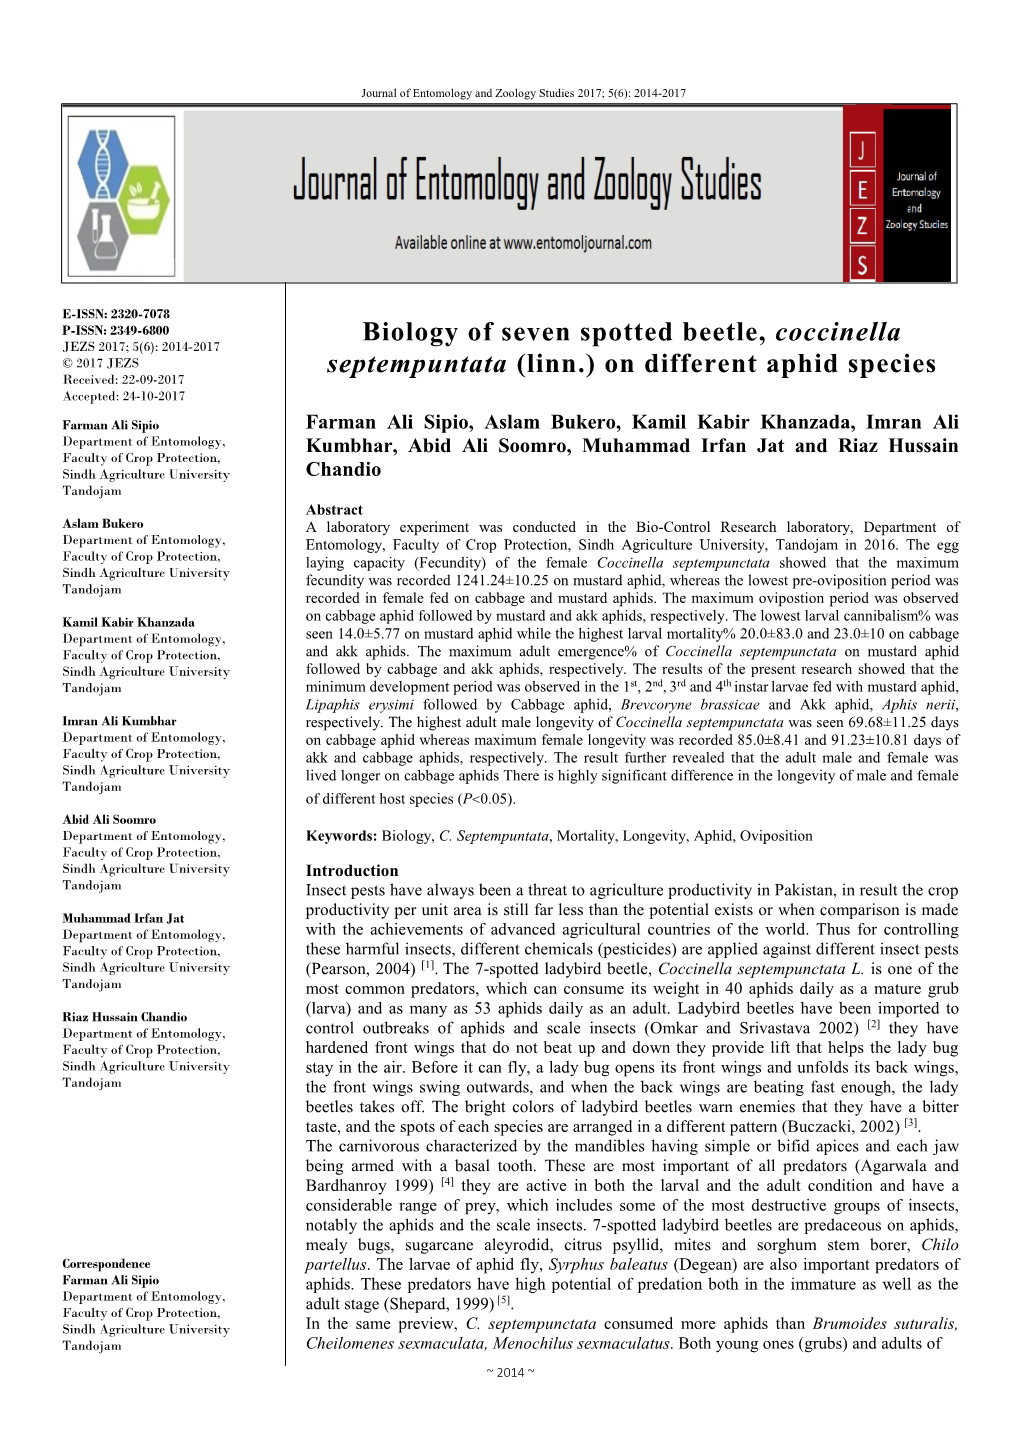 Biology of Seven Spotted Beetle, Coccinella Septempuntata (Linn.) On